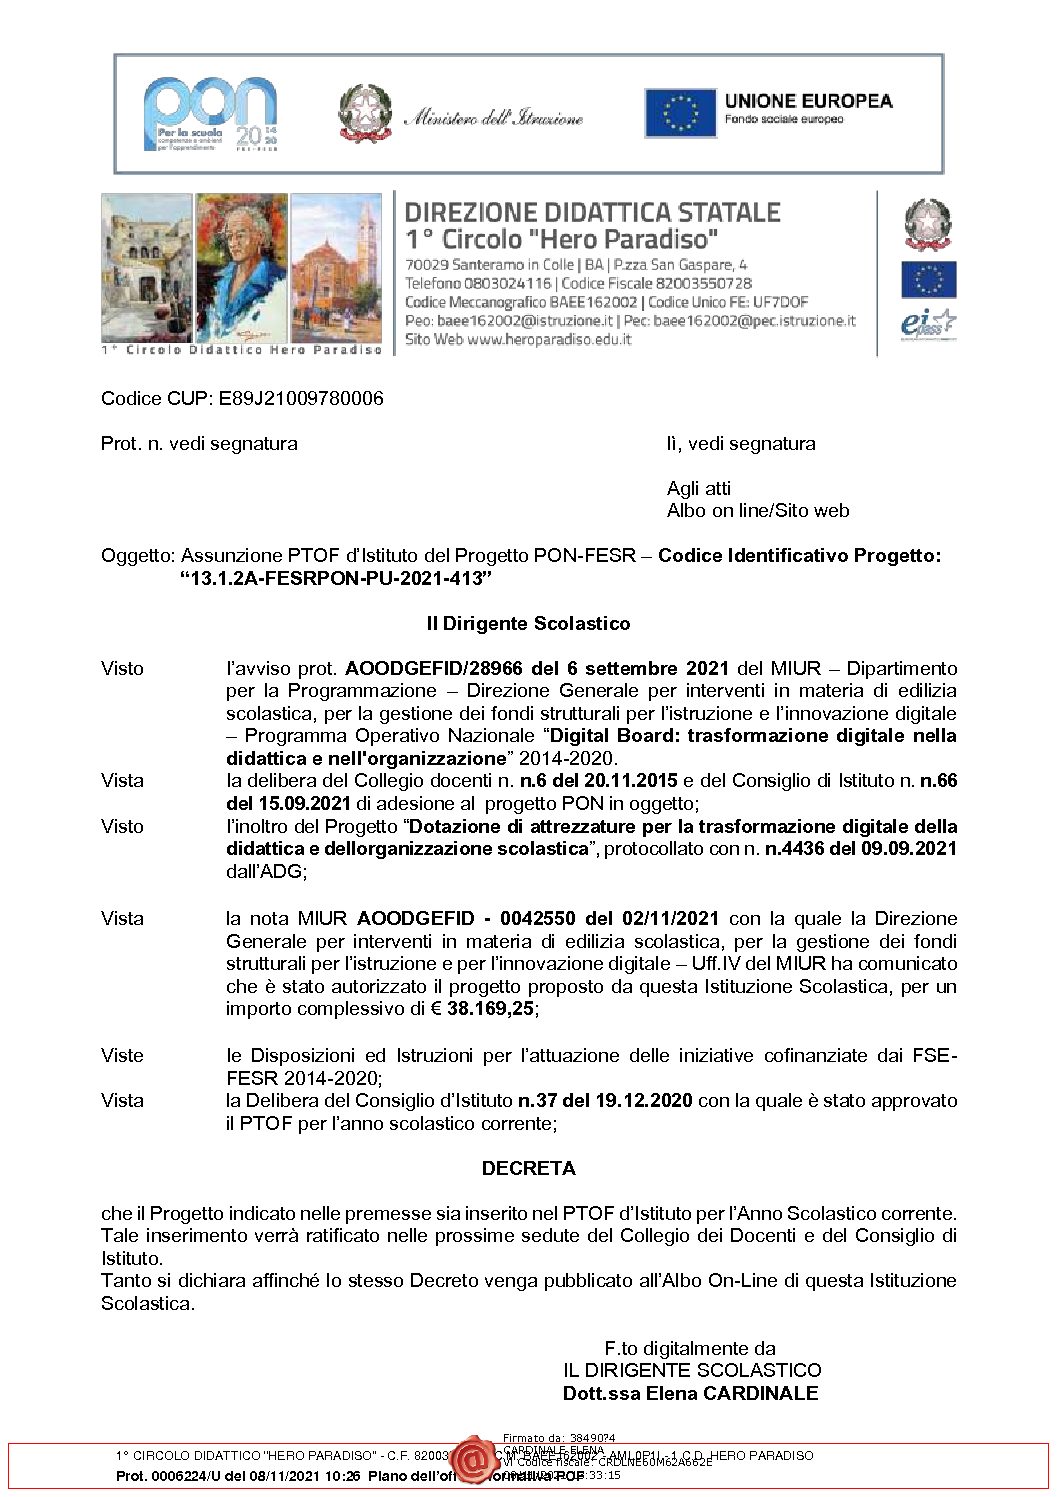 Decreto_assunzione_PTOF_2021-413.pdf.pades